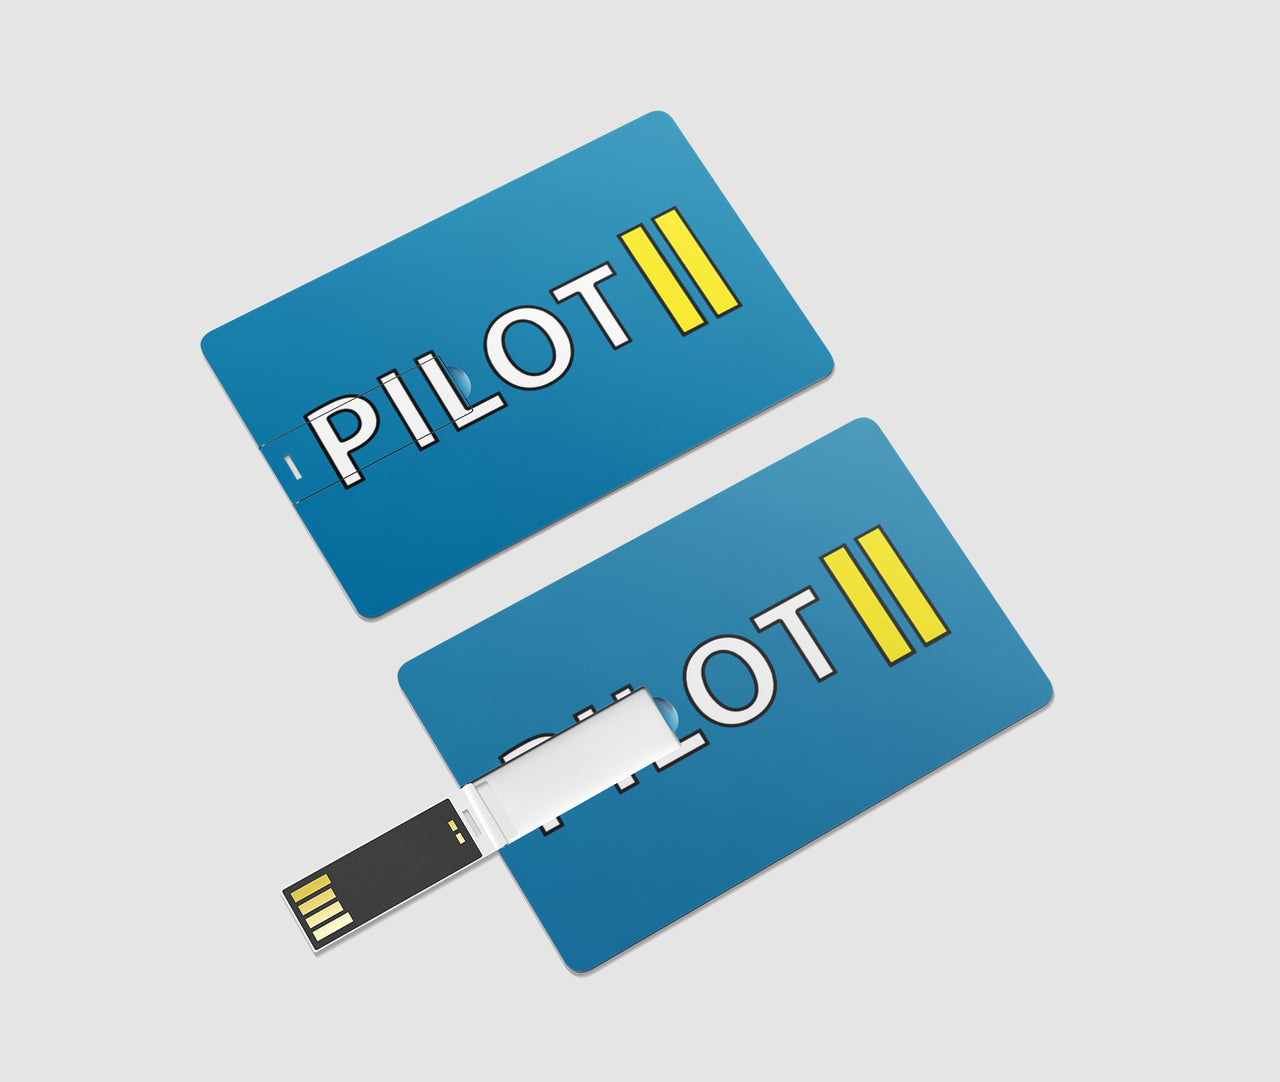 Pilot & Stripes (2 Lines) Designed USB Cards